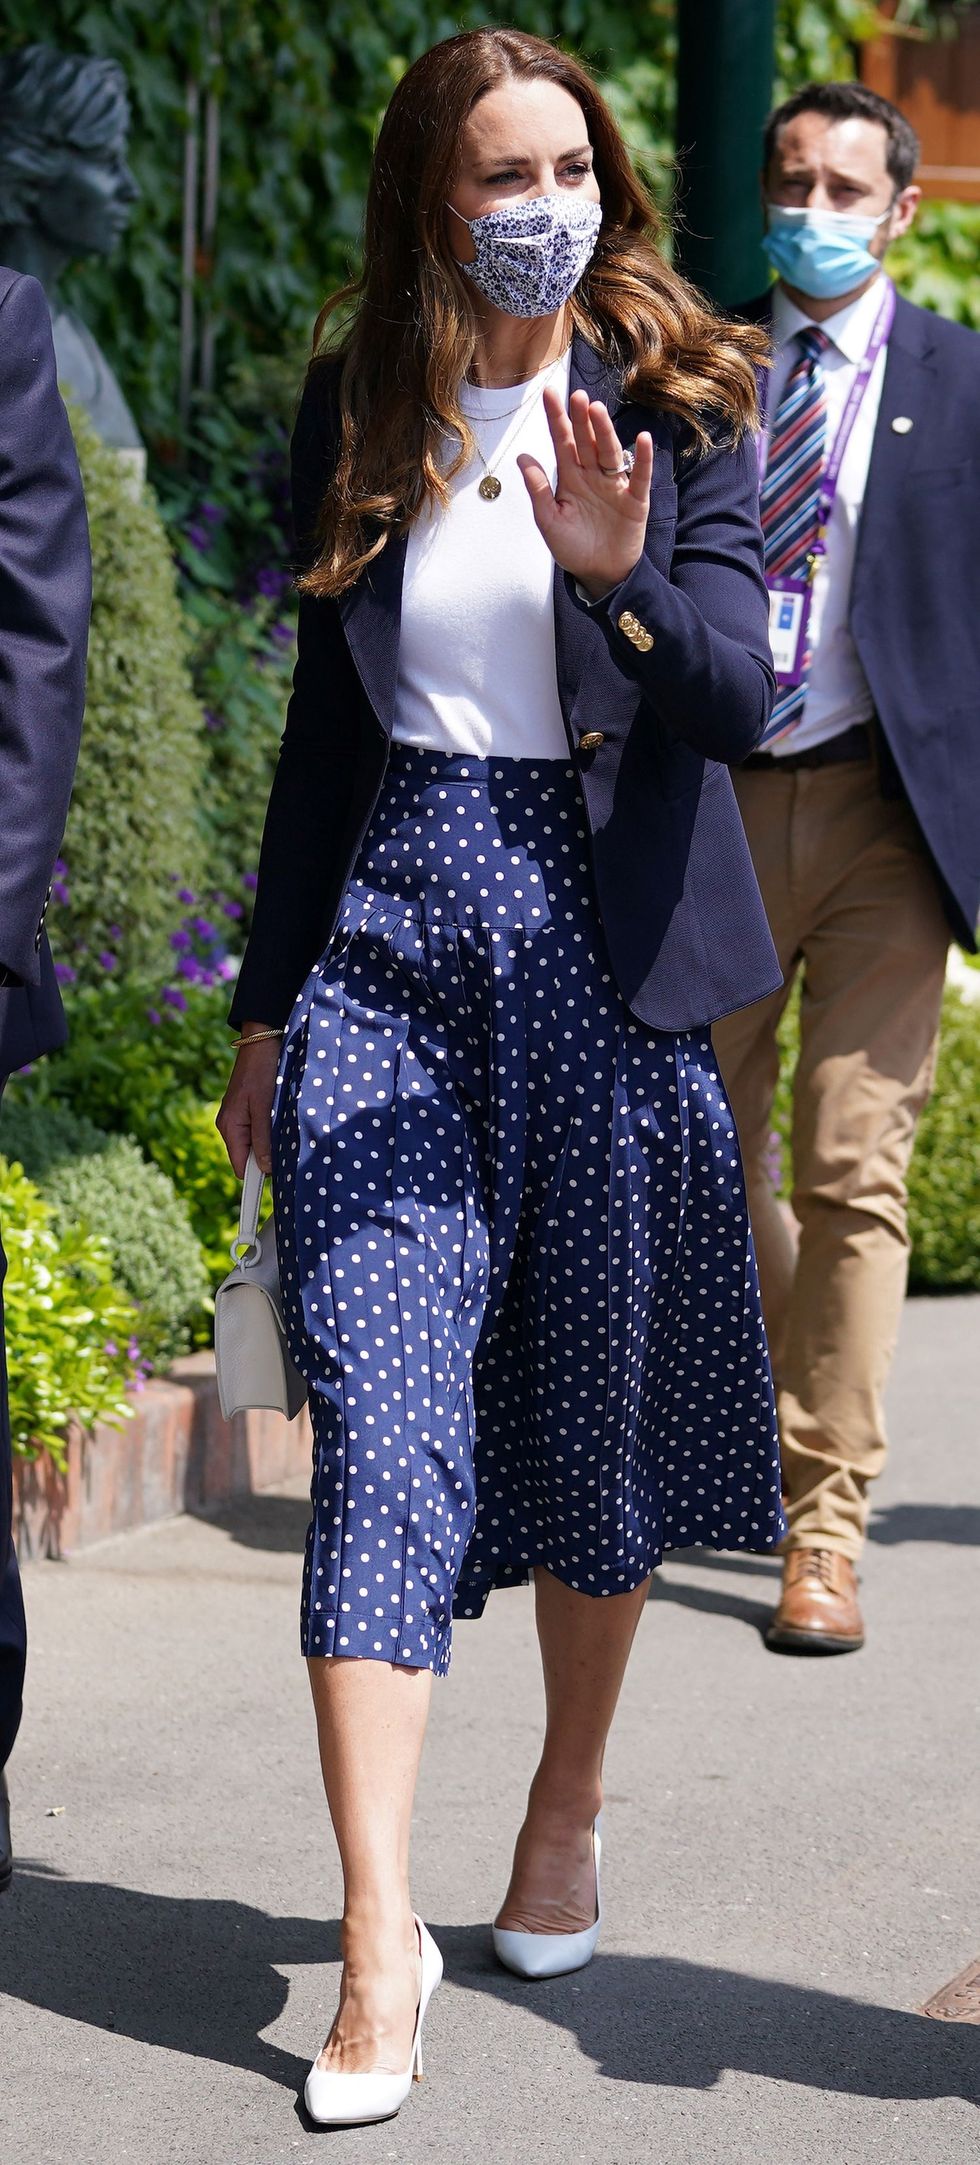 Kate Middleton Wears Navy Blazer and Polka Dots to Watch Wimbledon